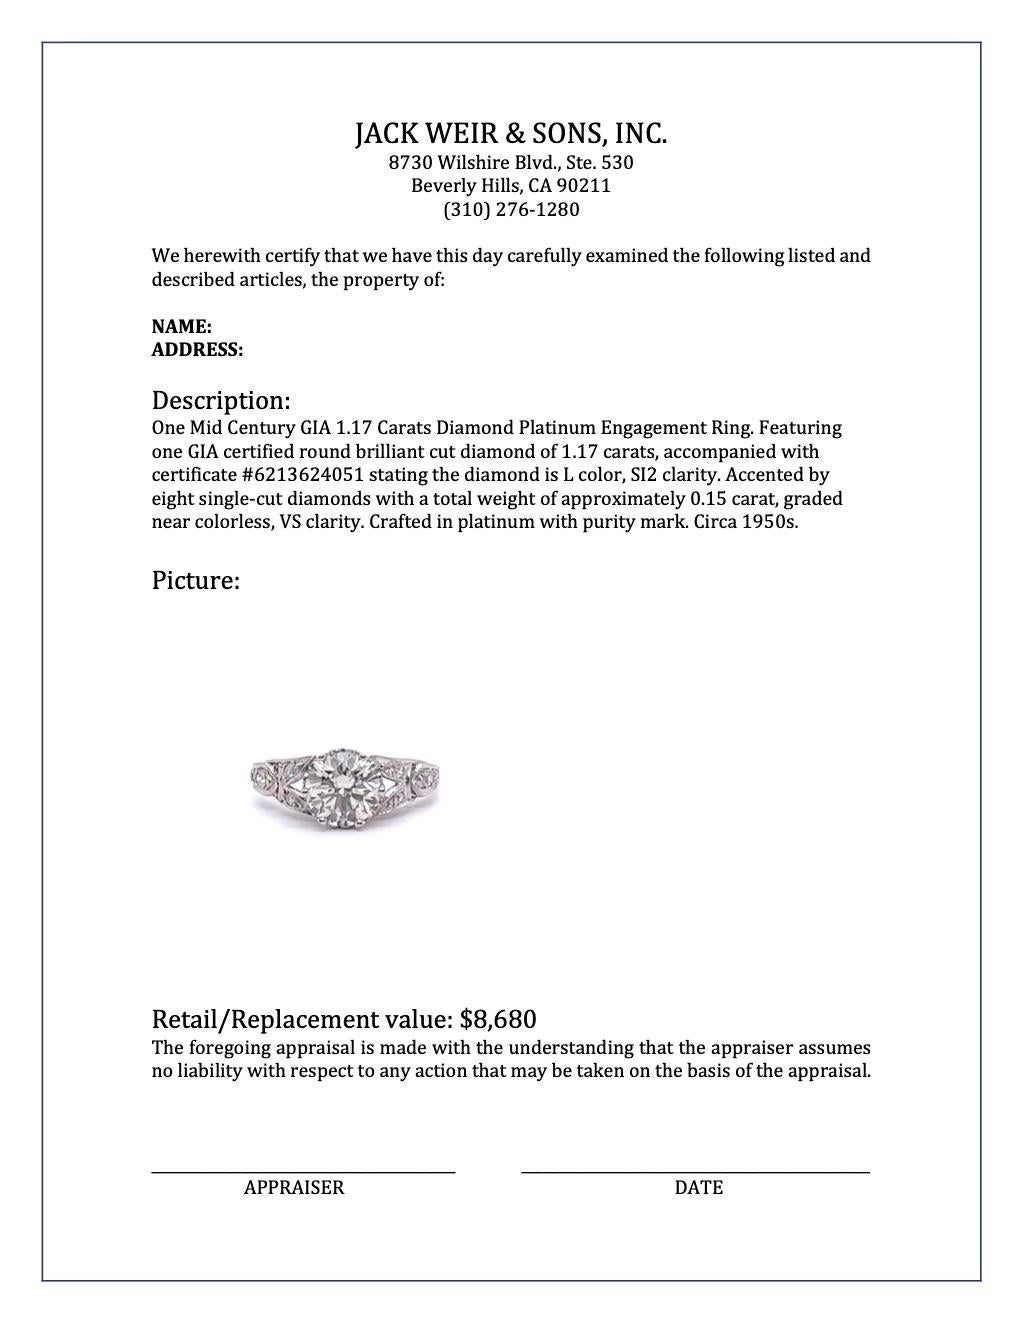 Mid Century GIA 1.17 Carats Diamond Platinum Engagement Ring 3